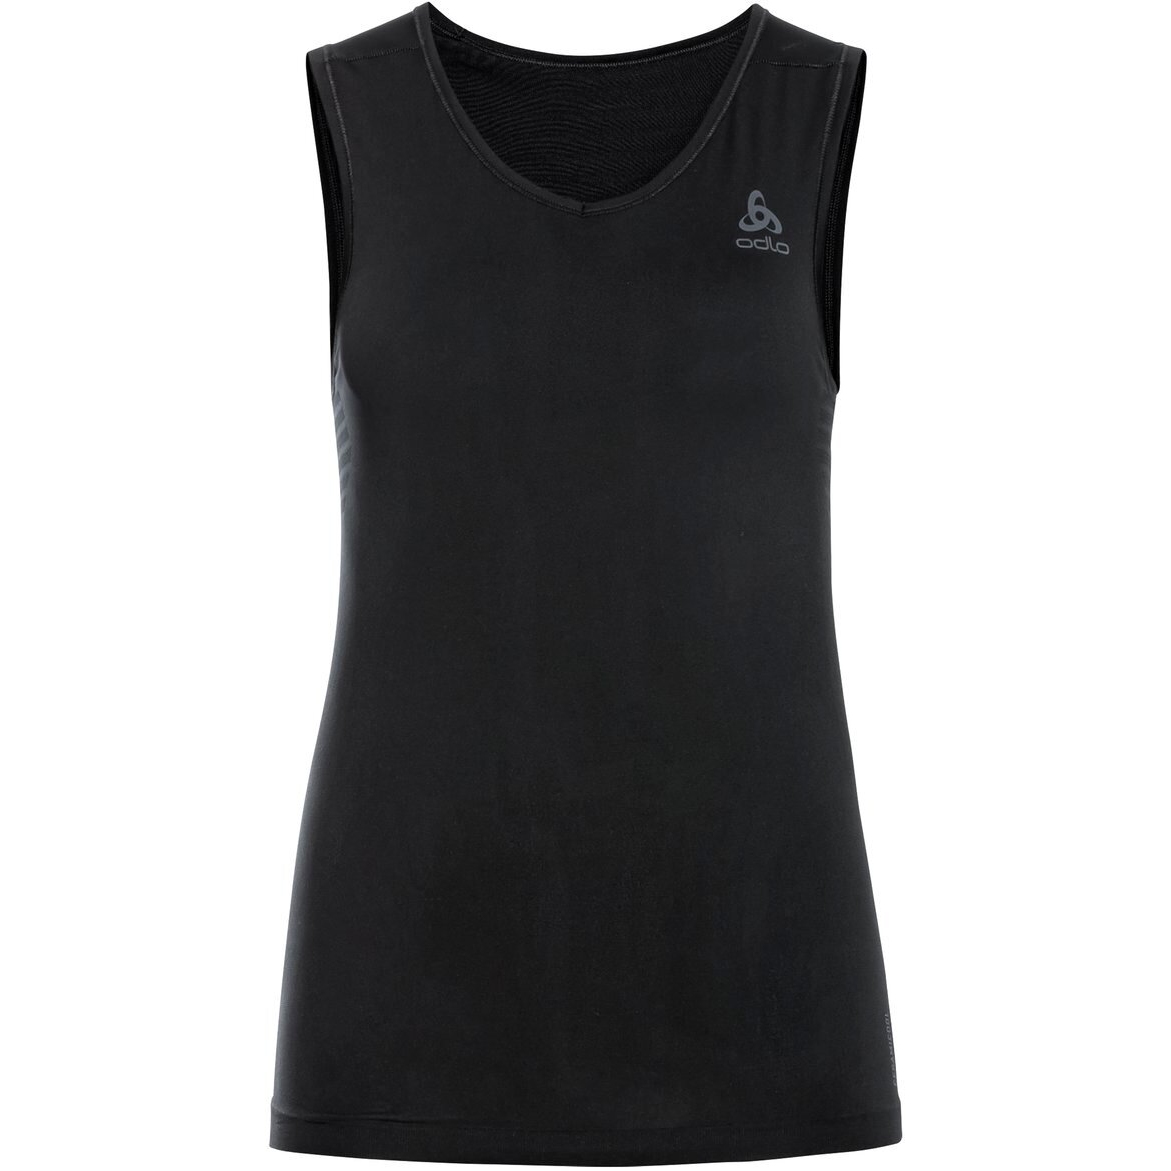 Produktbild von Odlo Performance X-Light V-Neck Ärmelloses Unterhemd Damen - schwarz